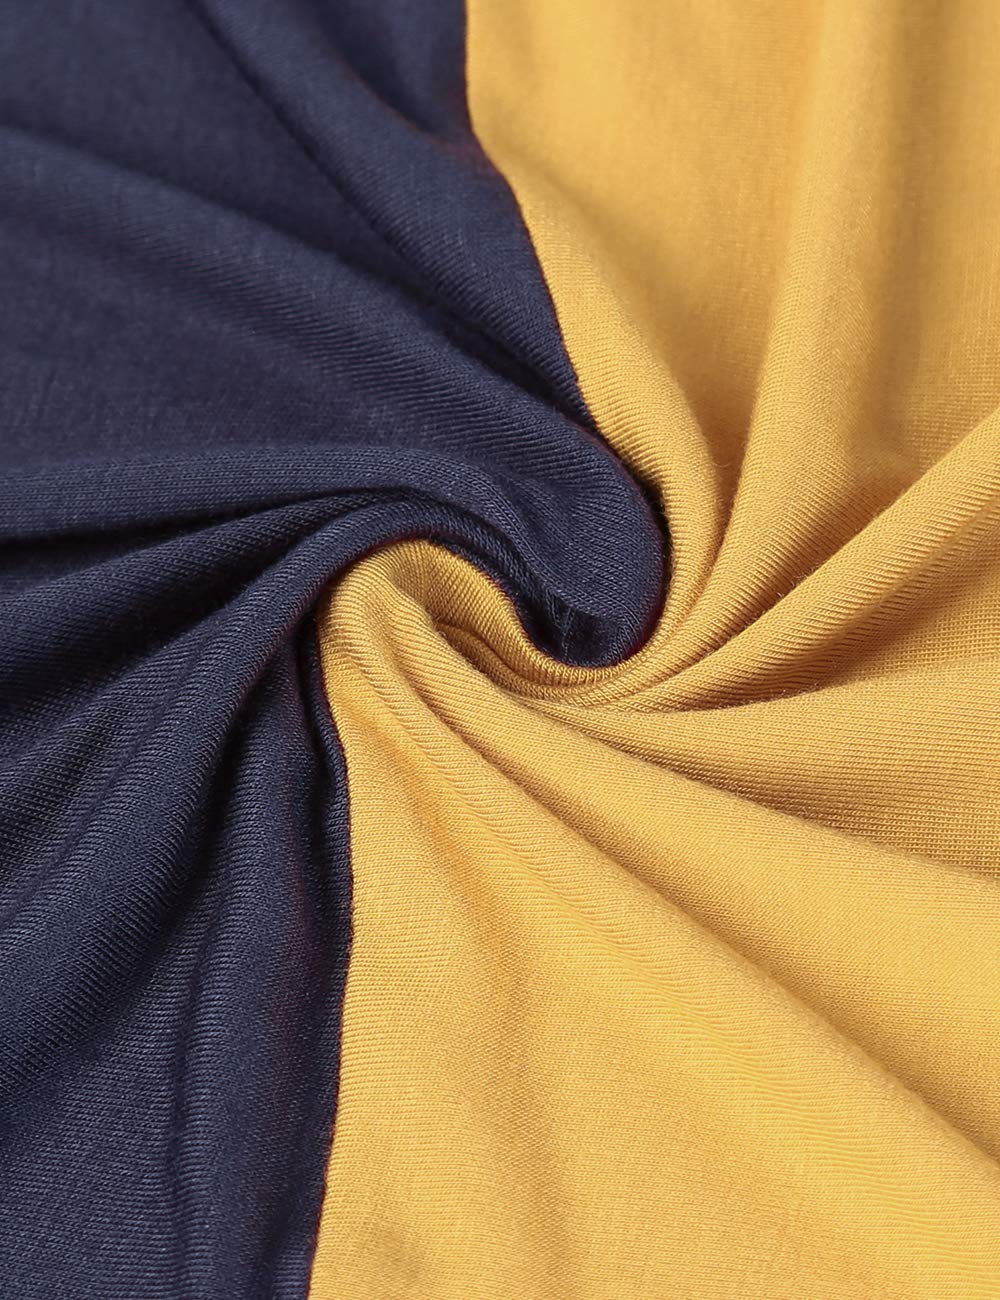 DJT Tunic Shirts Scoop Neck Navy Yellow Women's Long Sleeve Hanky Hem Color Block Stretch Casual Fall T Shirt Tops